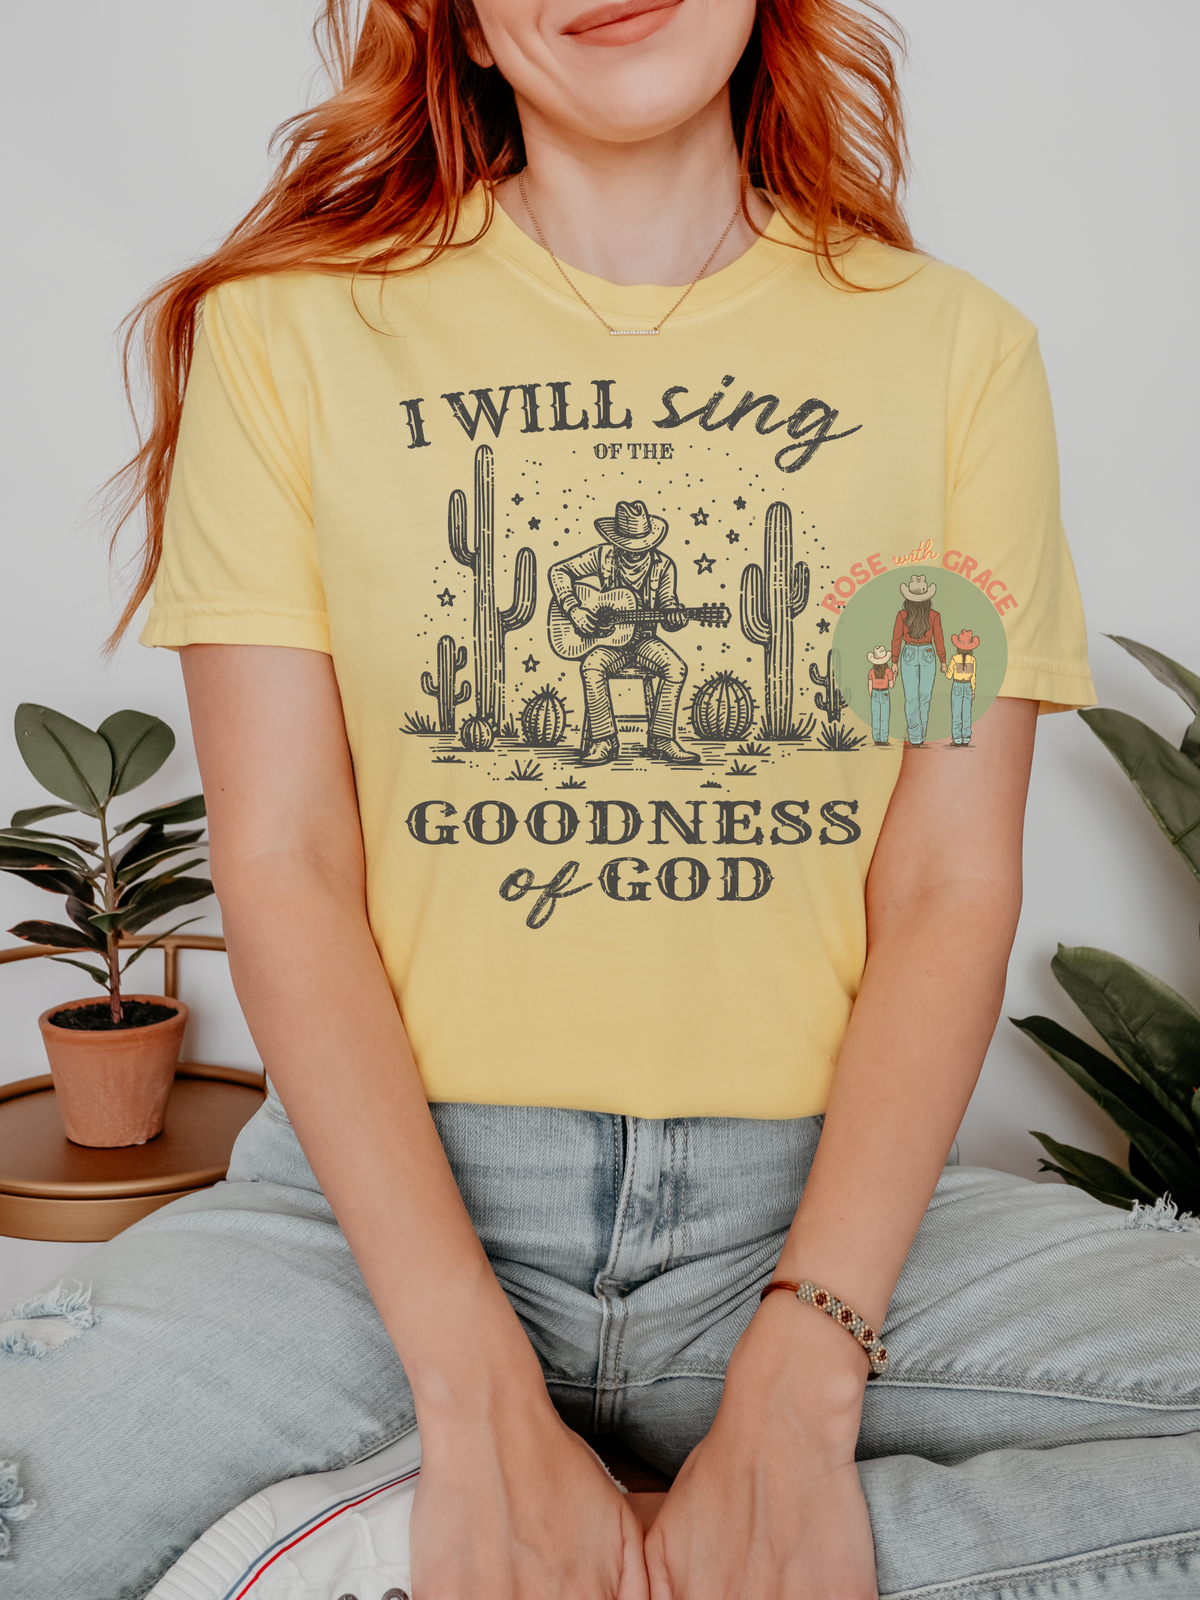 Goodness of God - Shirt or Sweatshirt *YOU PICK COLOR*